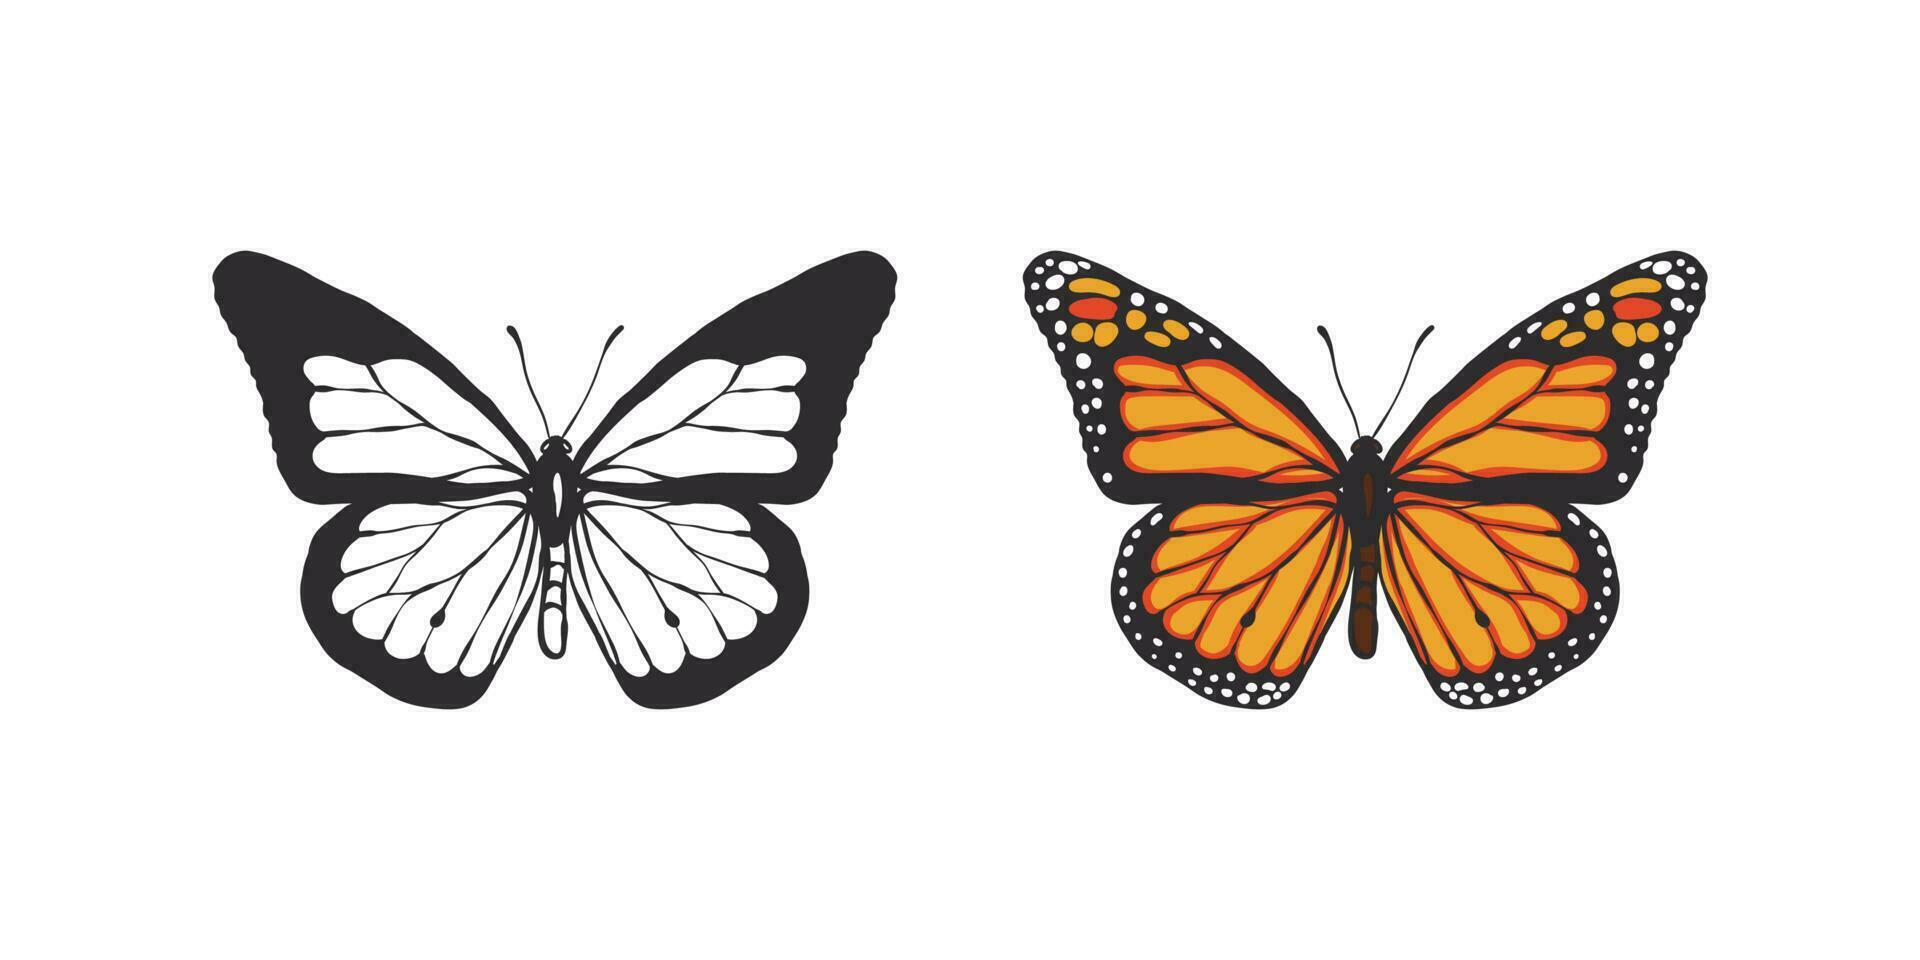 Schmetterlinge Symbole. Hand gezeichnet Schmetterling Konturen. Schmetterling Flügel. Vektor skalierbar Grafik